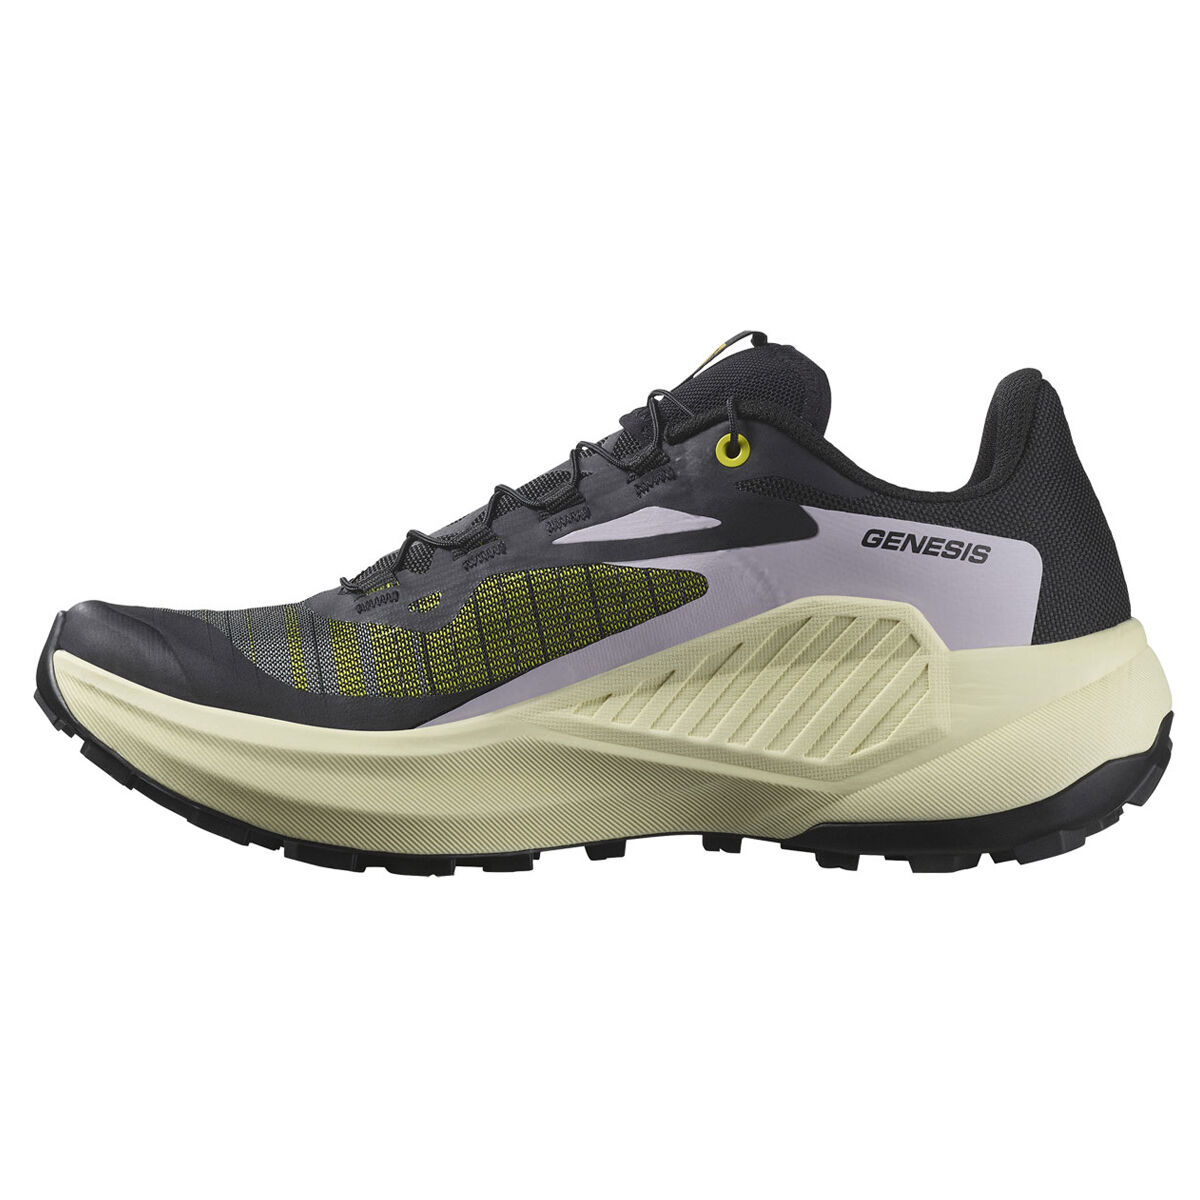 Salomon - Trail Running Shoes, Clothing & Gear - rebel